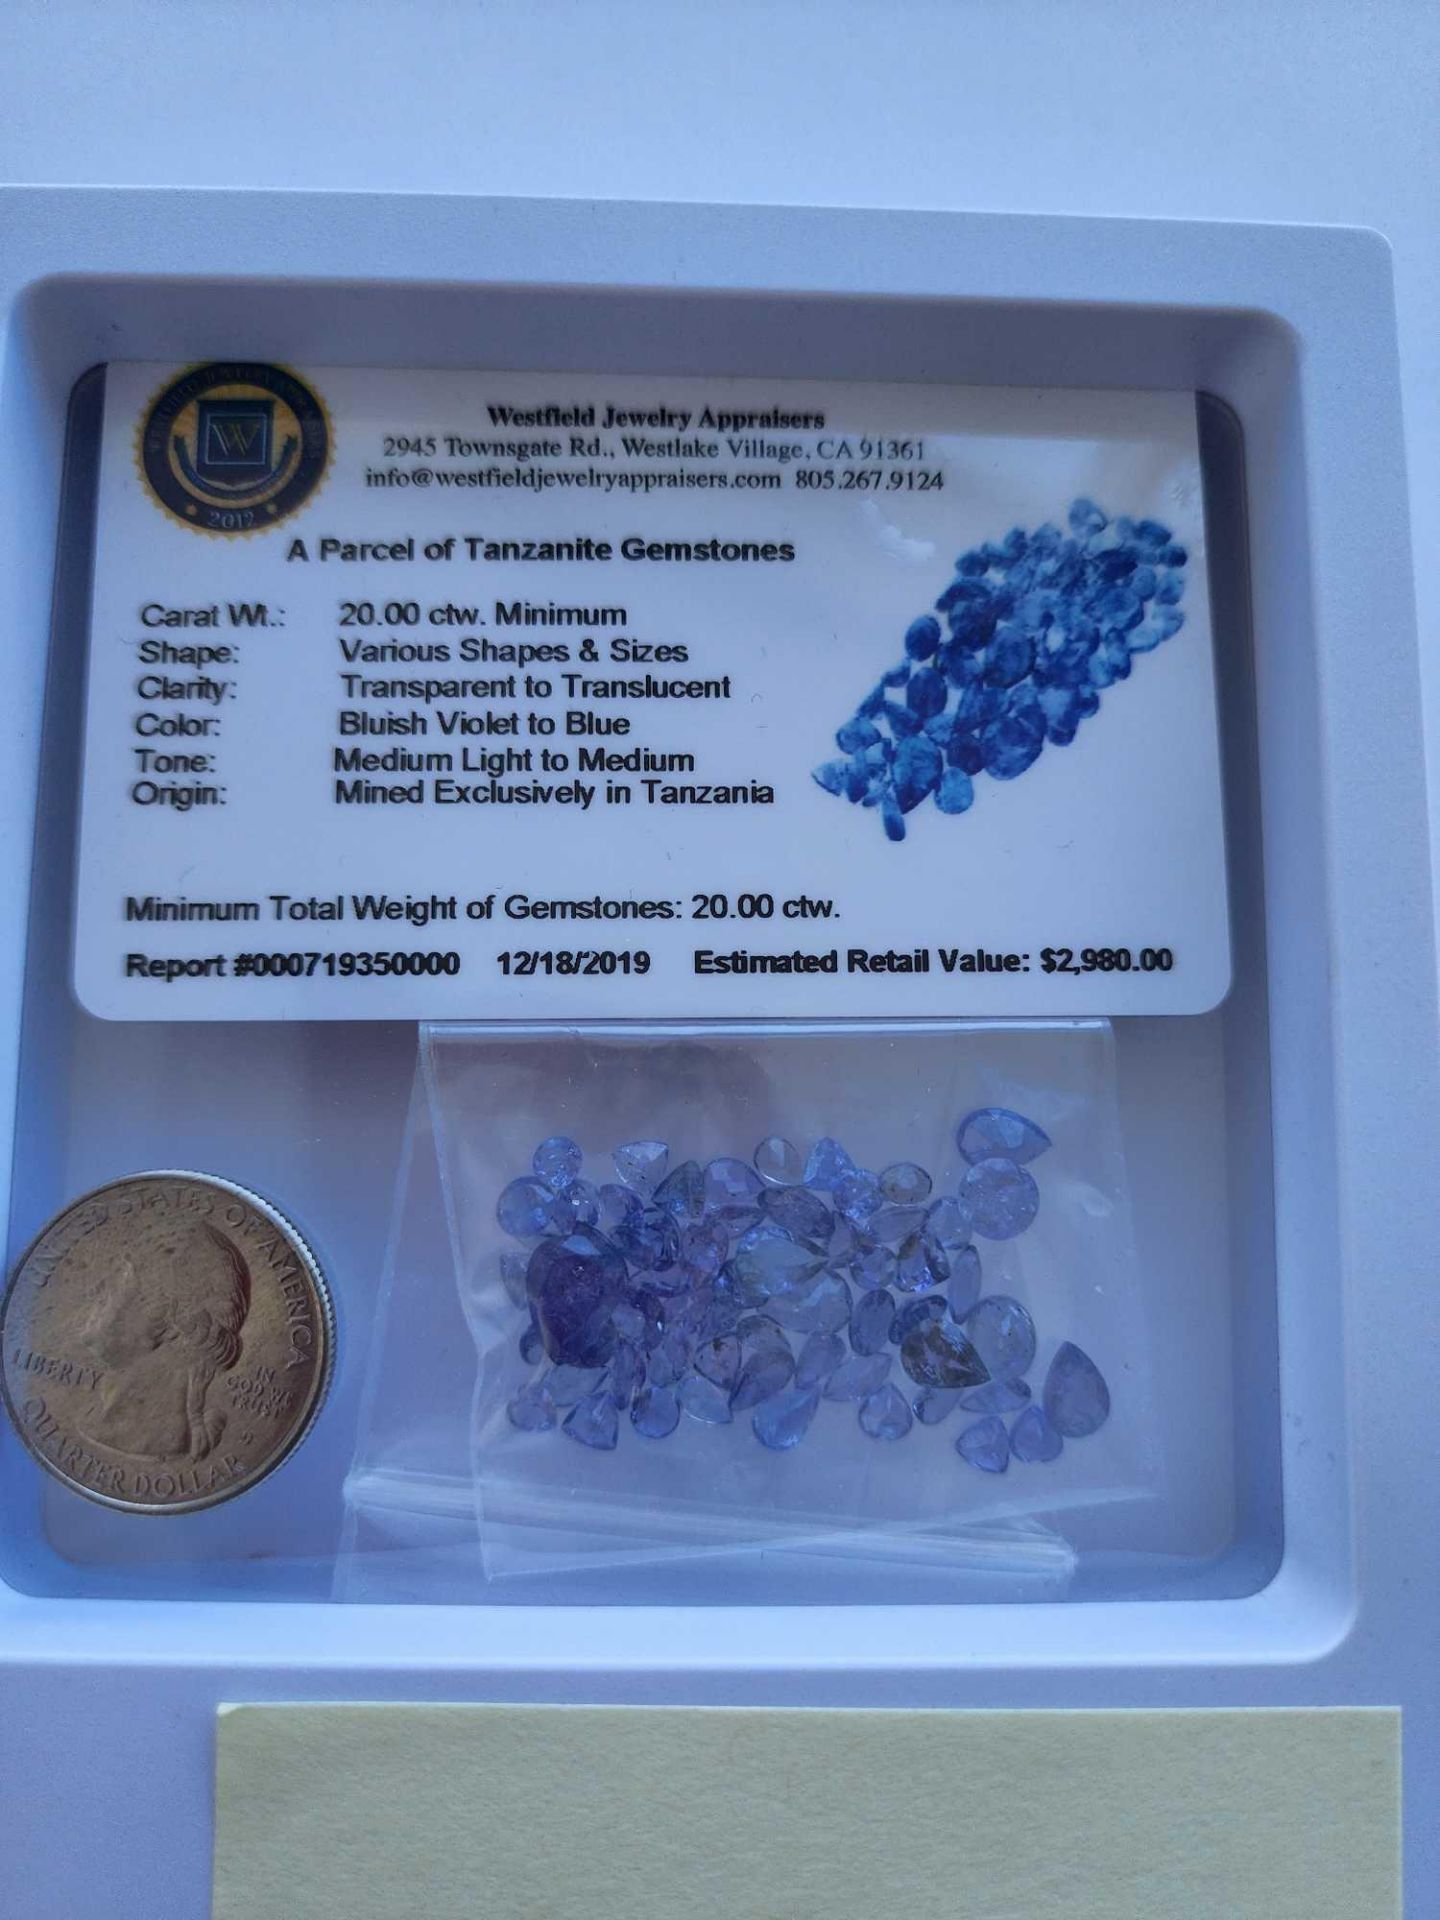 20 ctw loose tanzanite gem stones - Image 3 of 3